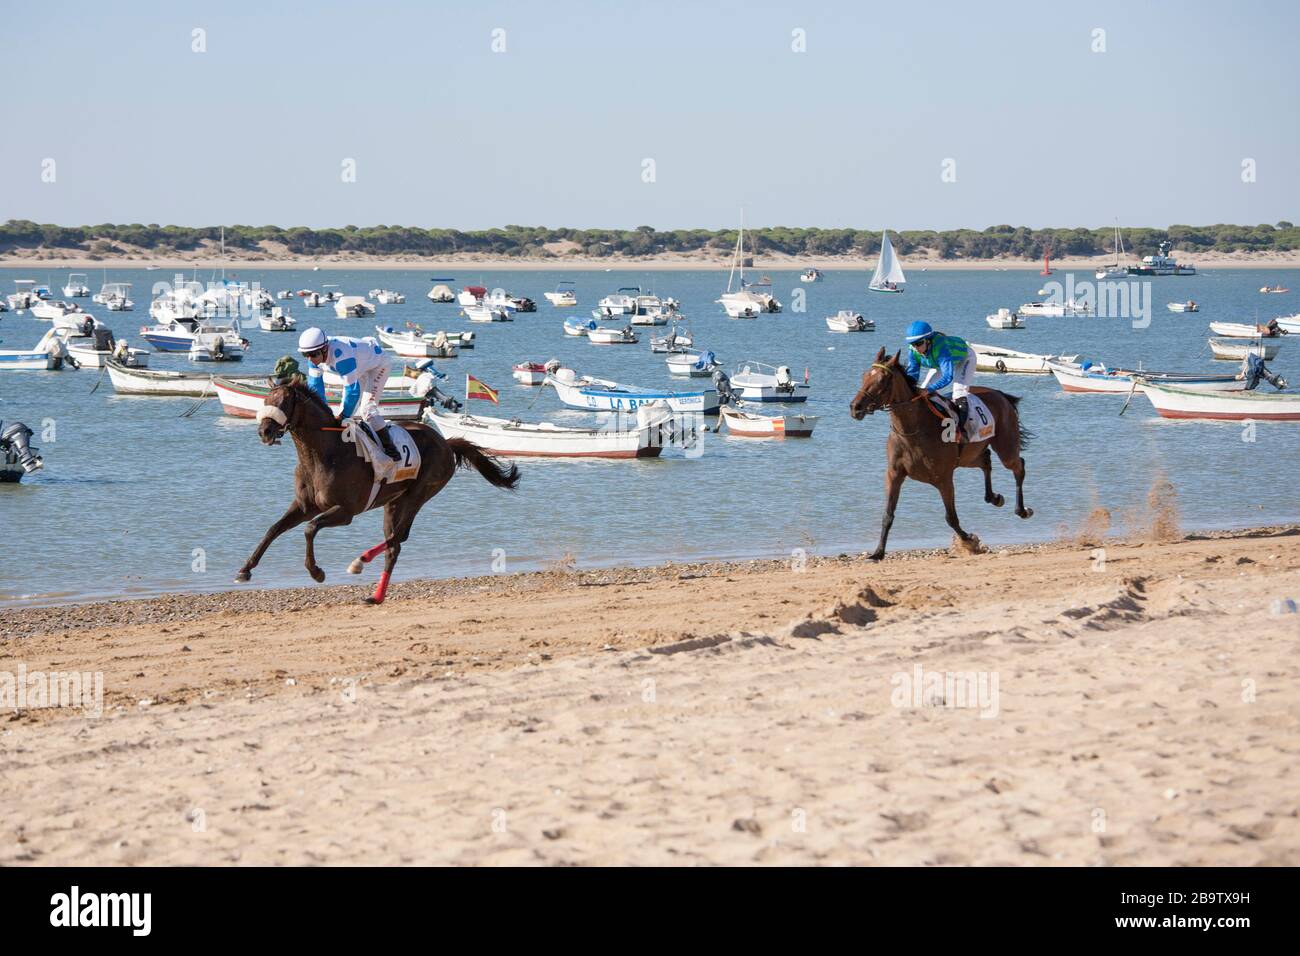 The annual August horserace meeting run on the beach at Sanlucar de Barrameda, Cadiz, Spain. 3rd August 2017. Stock Photo